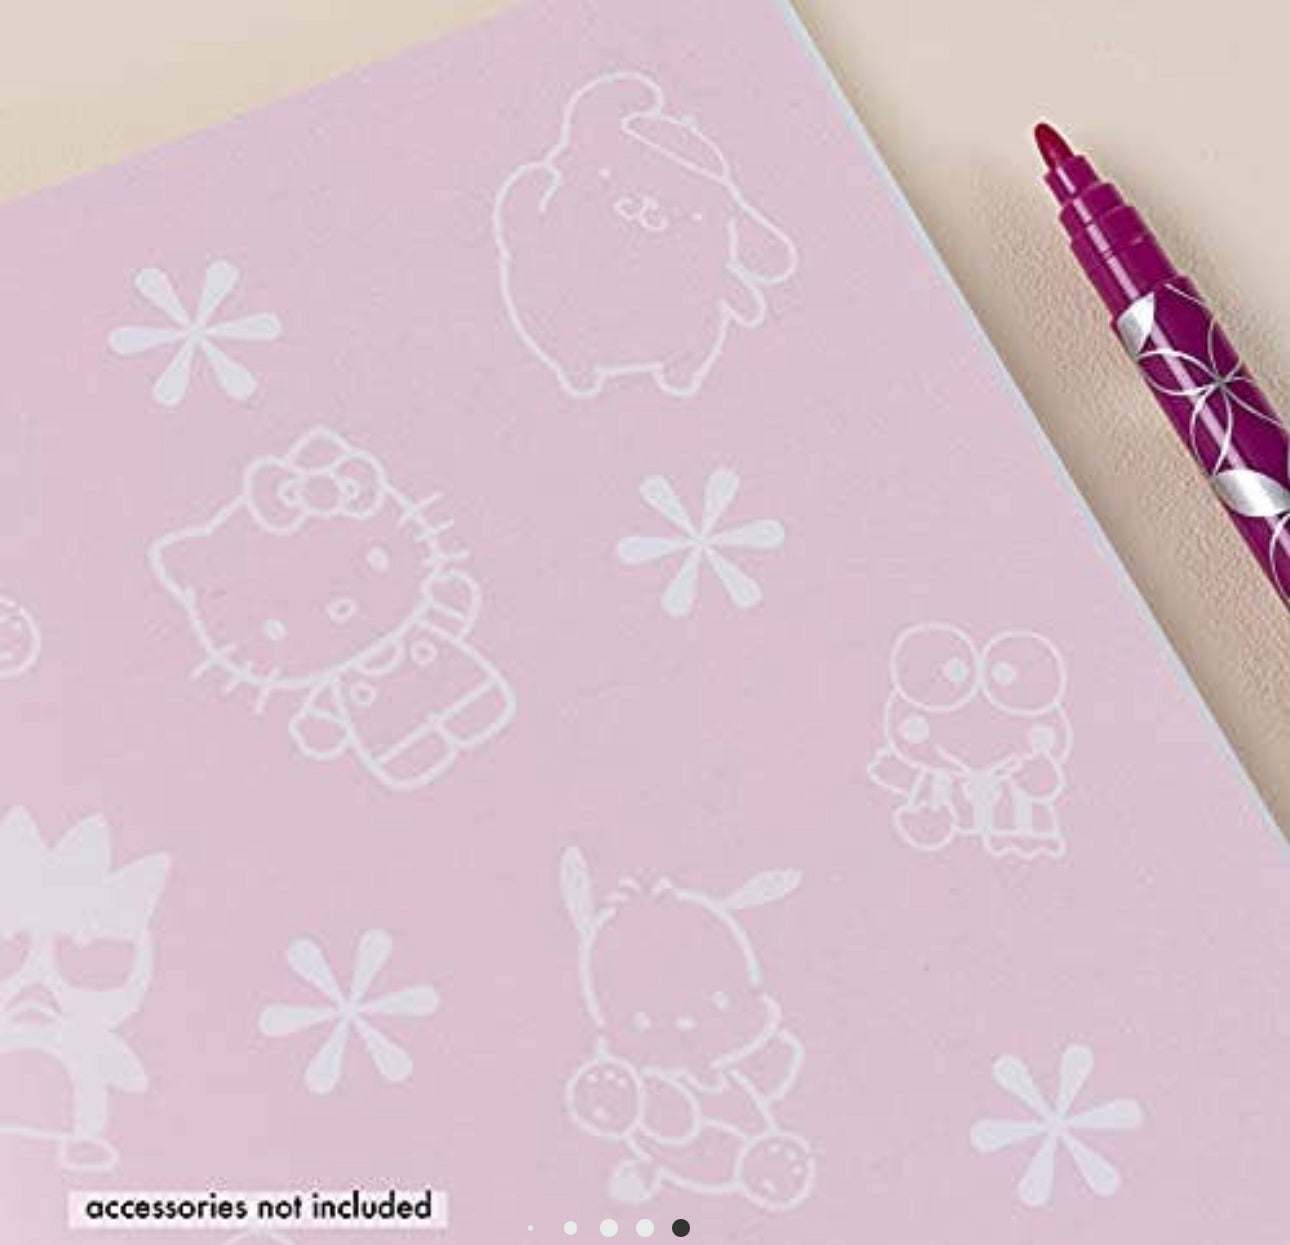 Hello Kitty and Friends x Erin Condren Petite Journal